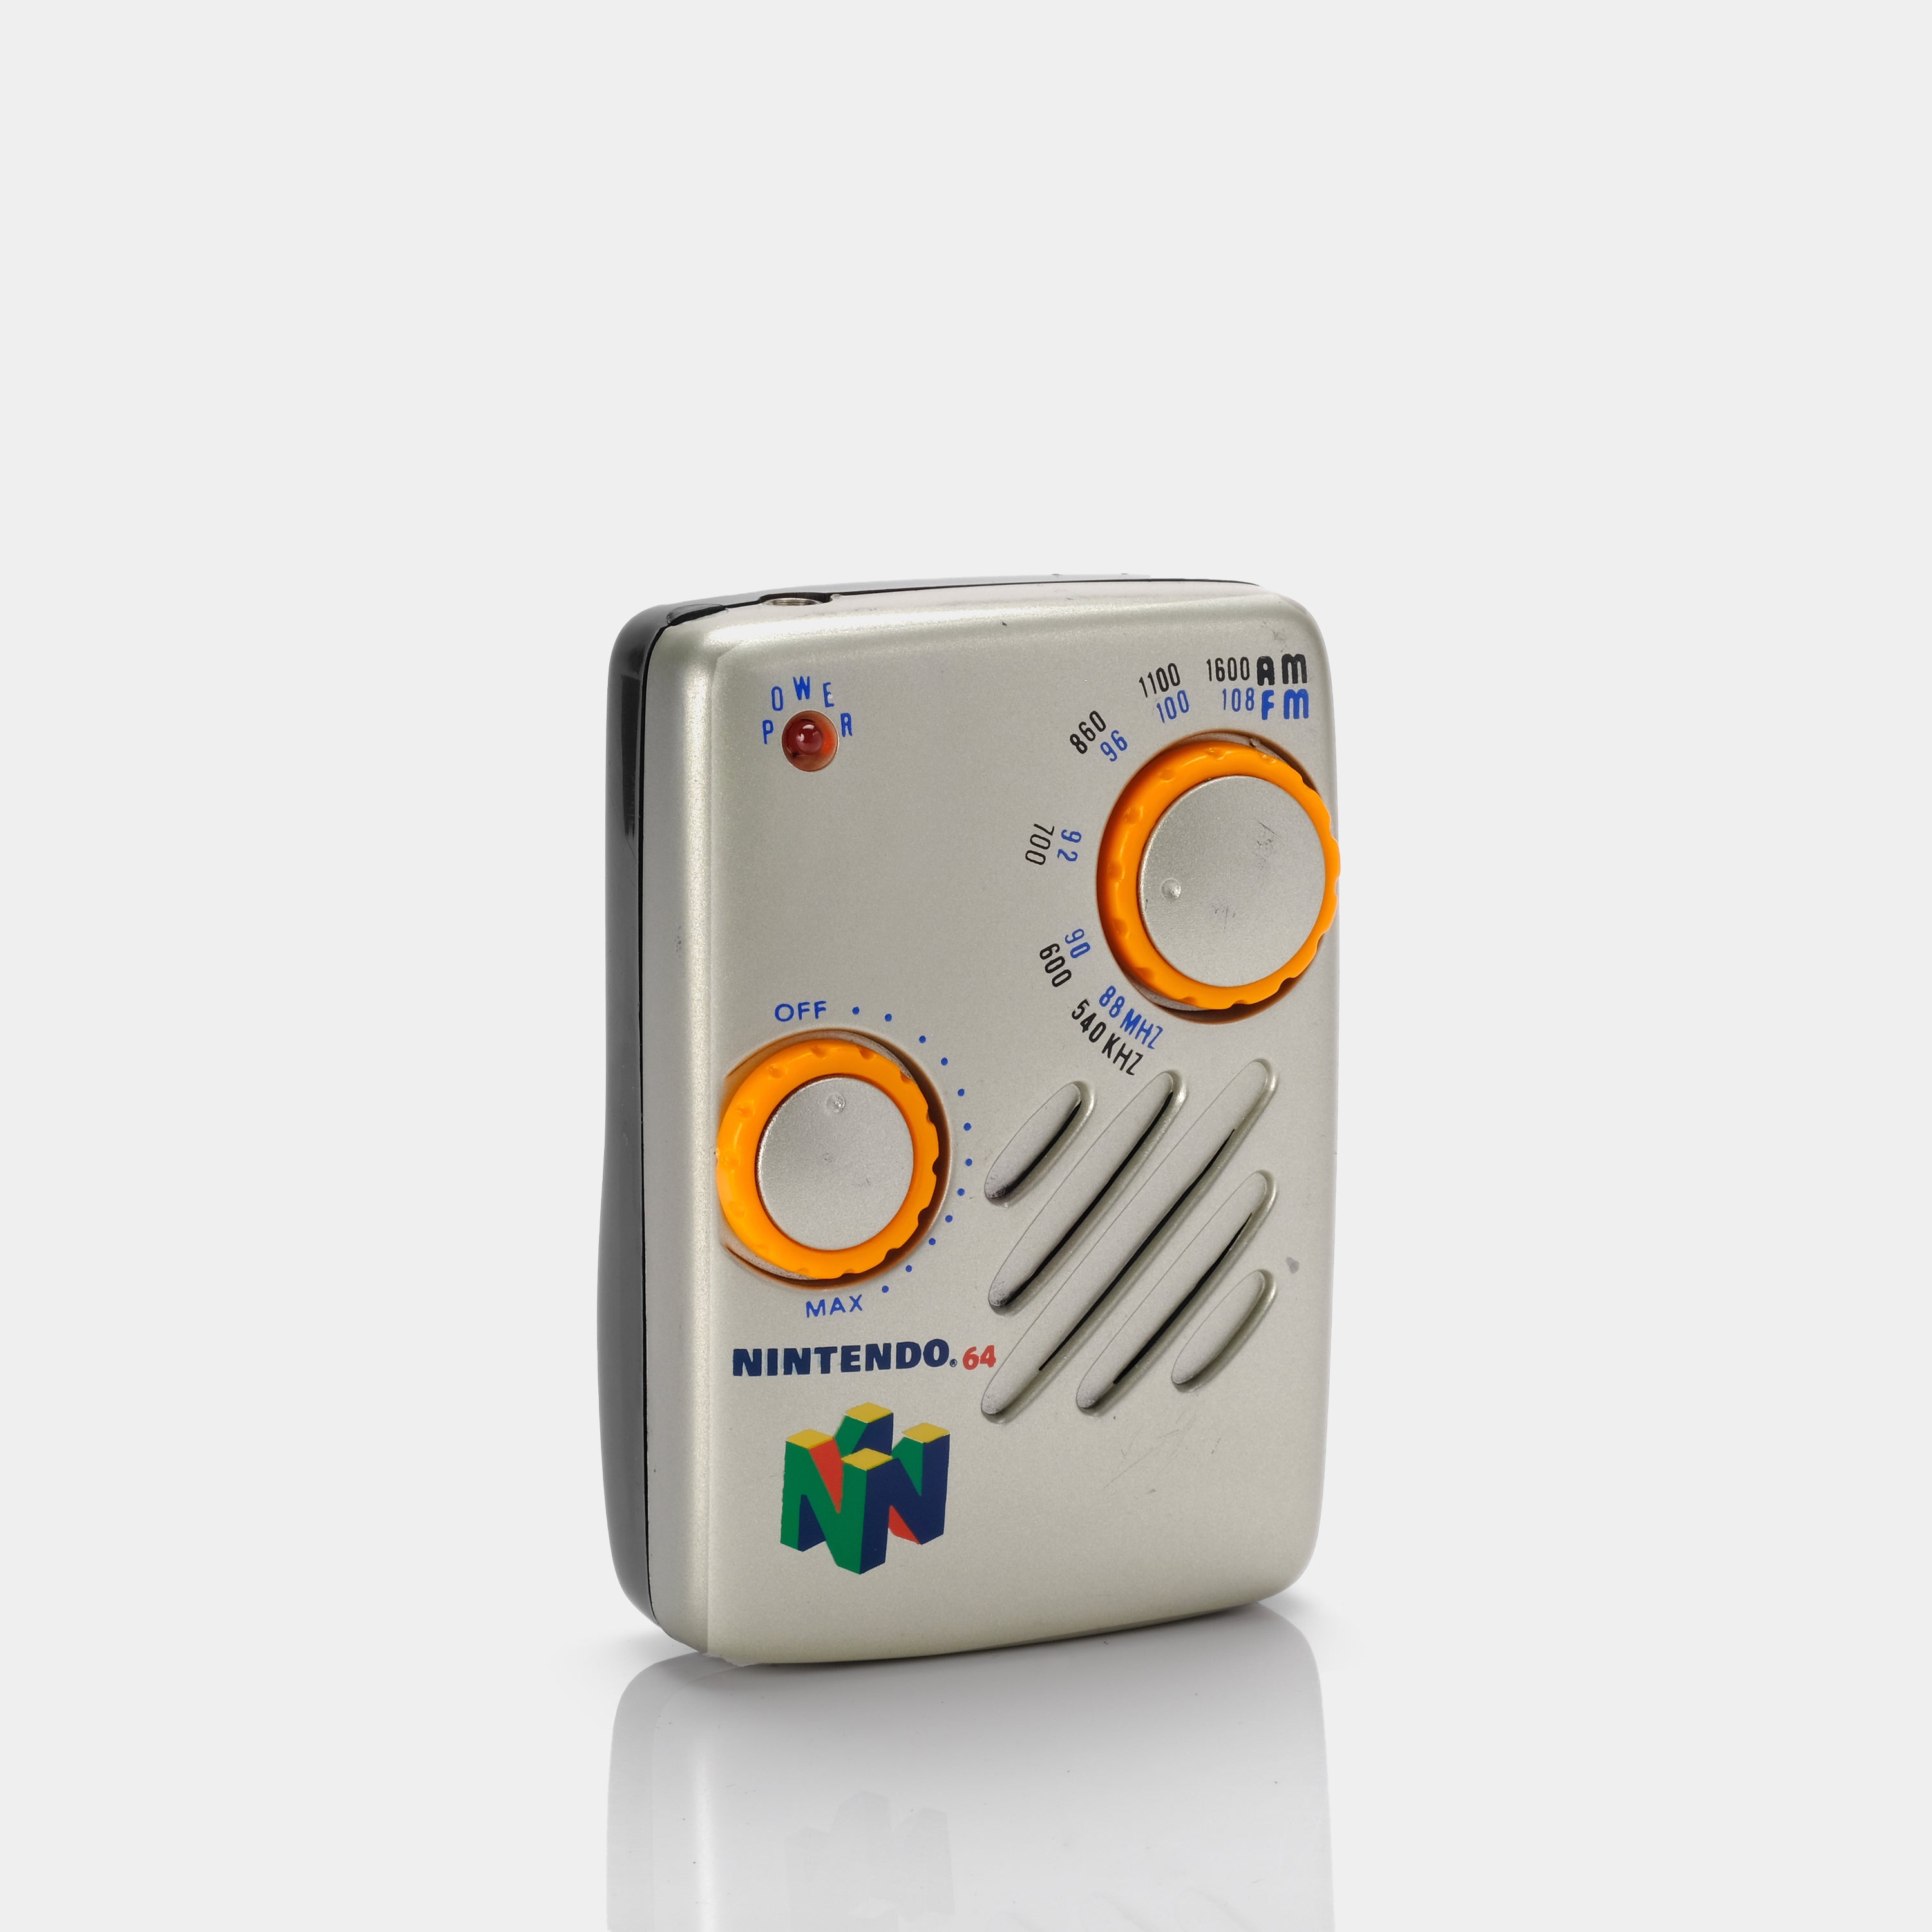 Nintendo Sports Nintendo 64 AM/FM Portable Radio